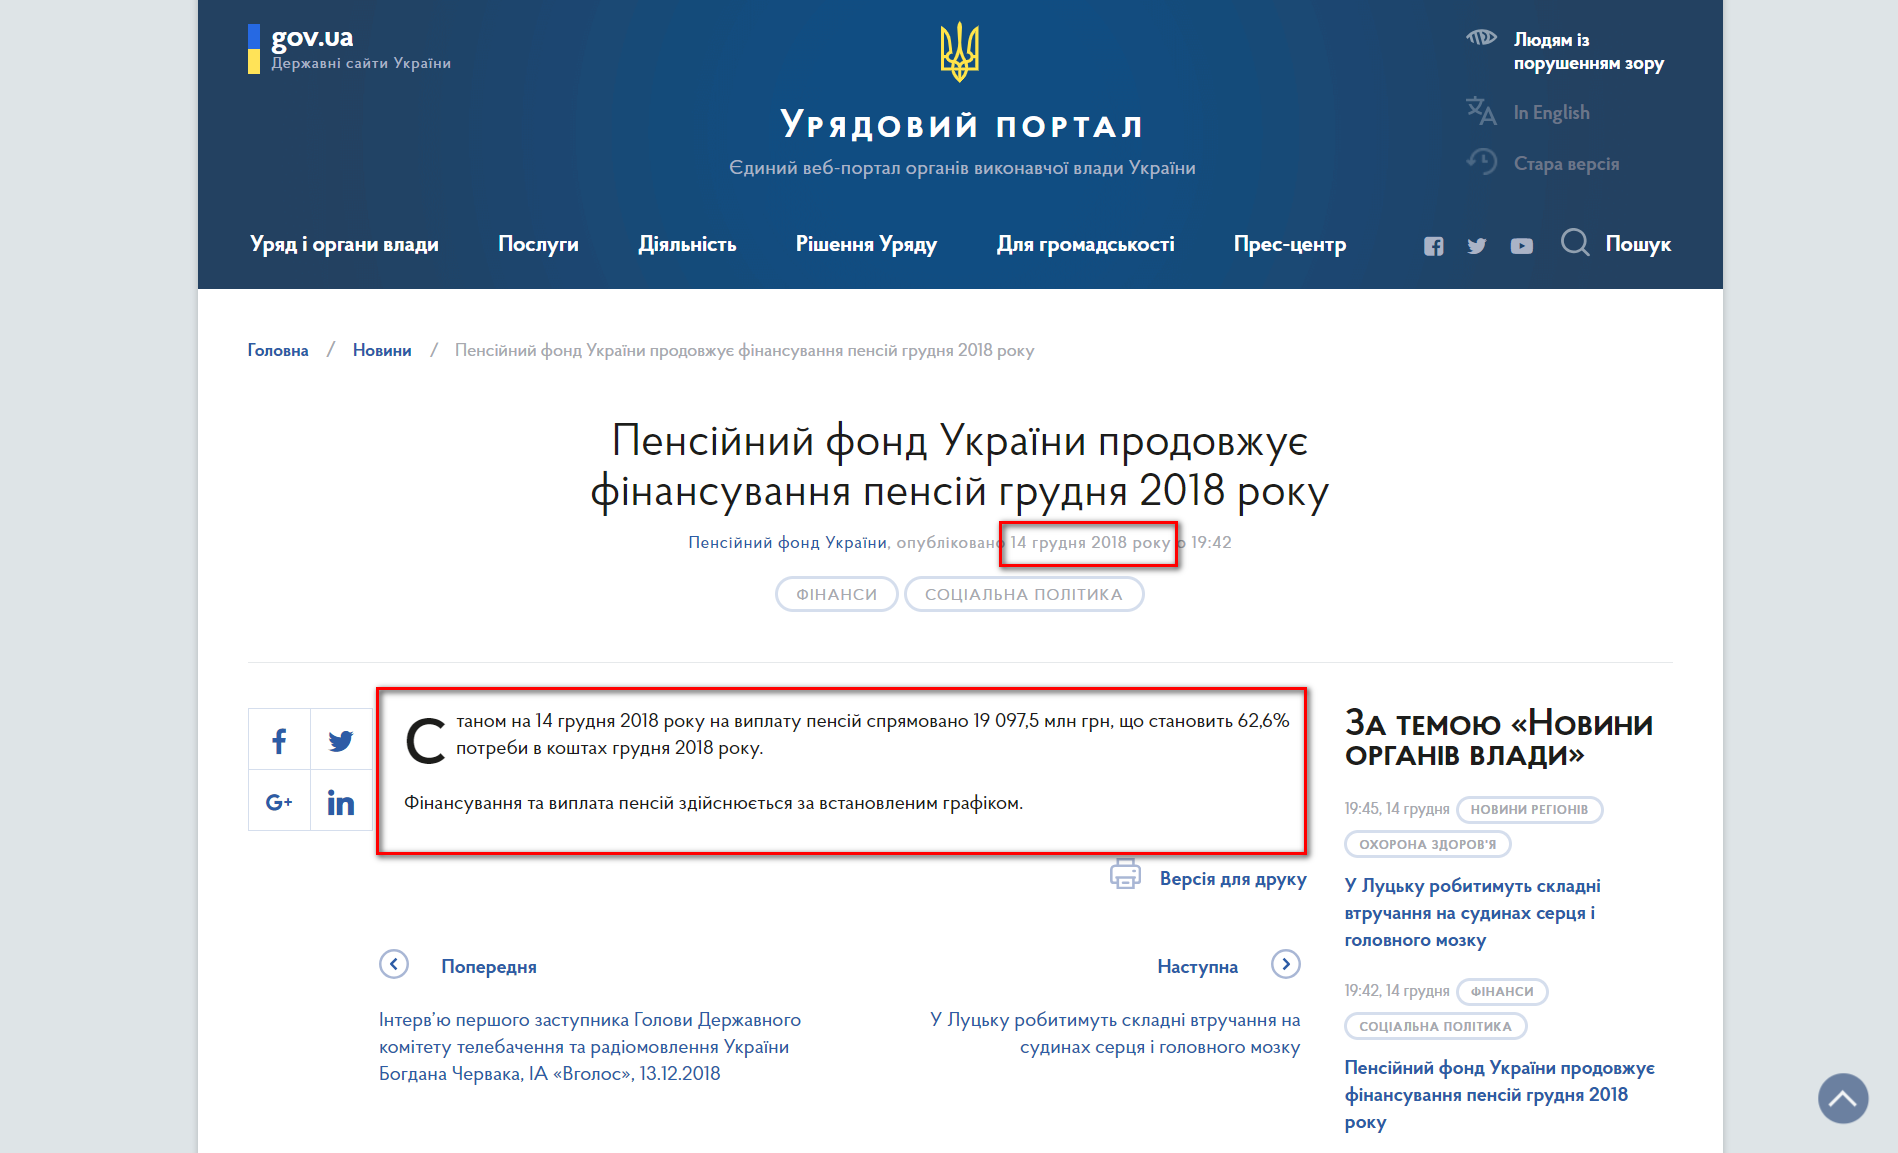 https://www.kmu.gov.ua/ua/news/pensijnij-fond-ukrayini-prodovzhuye-finansuvannya-pensij-grudnya-2018-roku